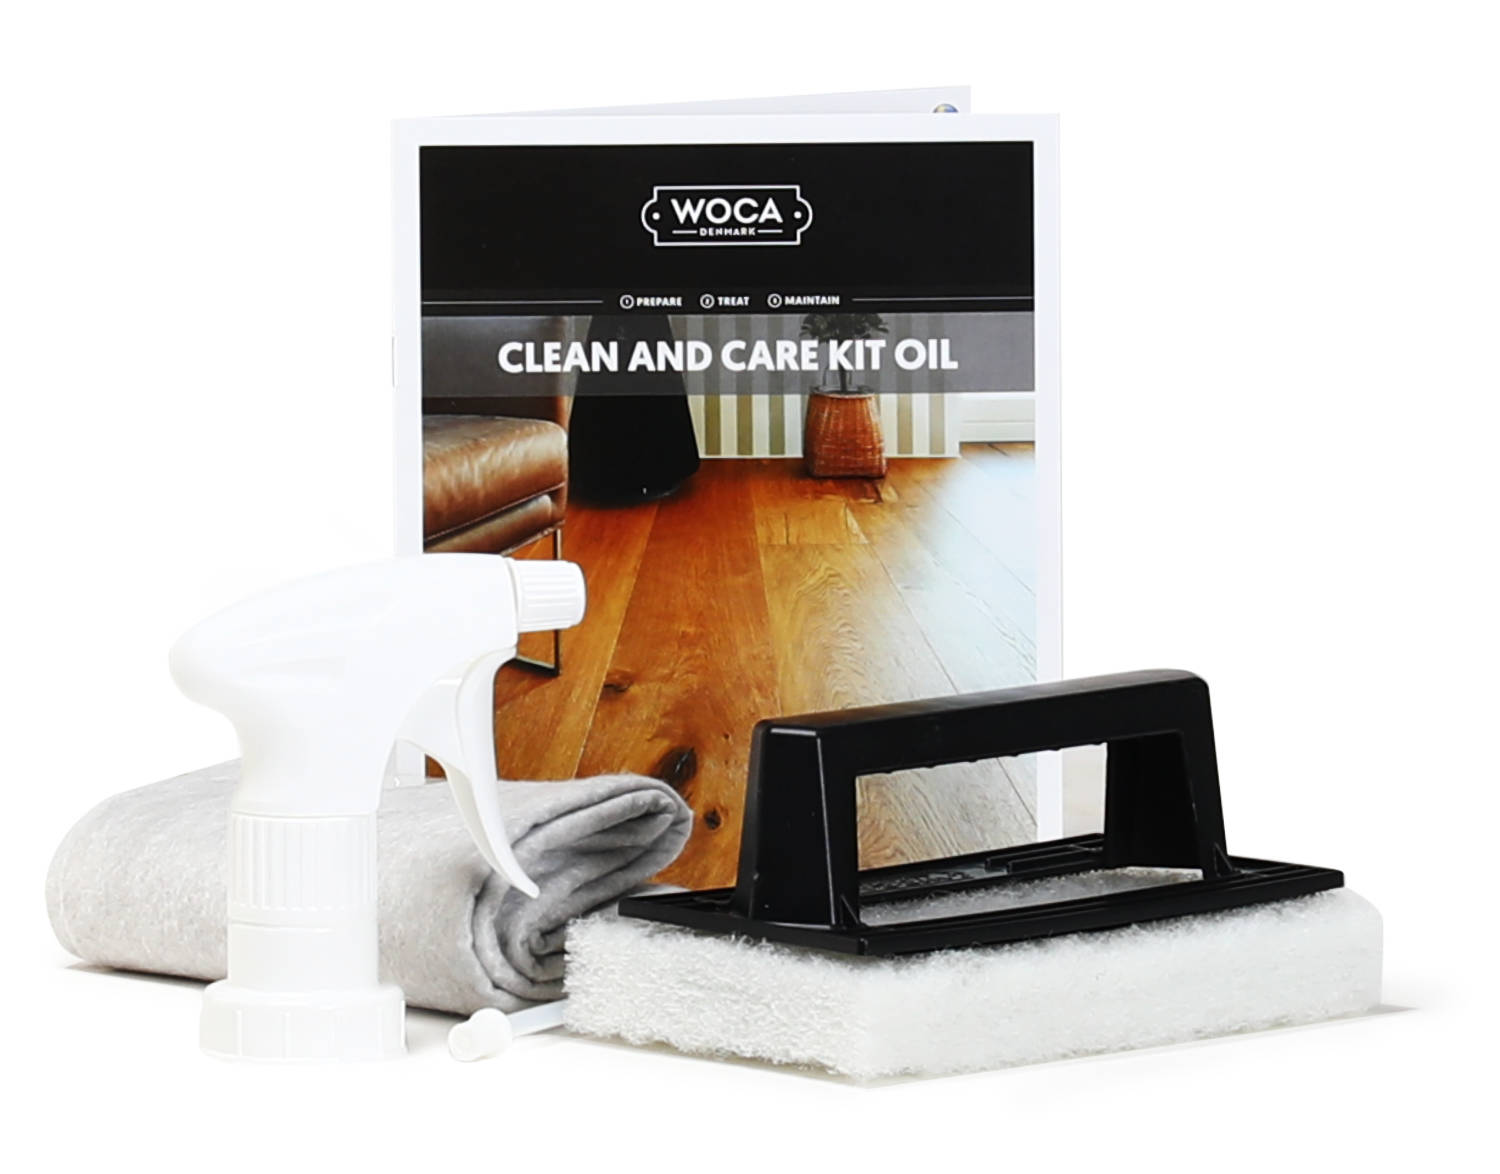 WOCA Pflegebox - Clean and Care Kit | Natur